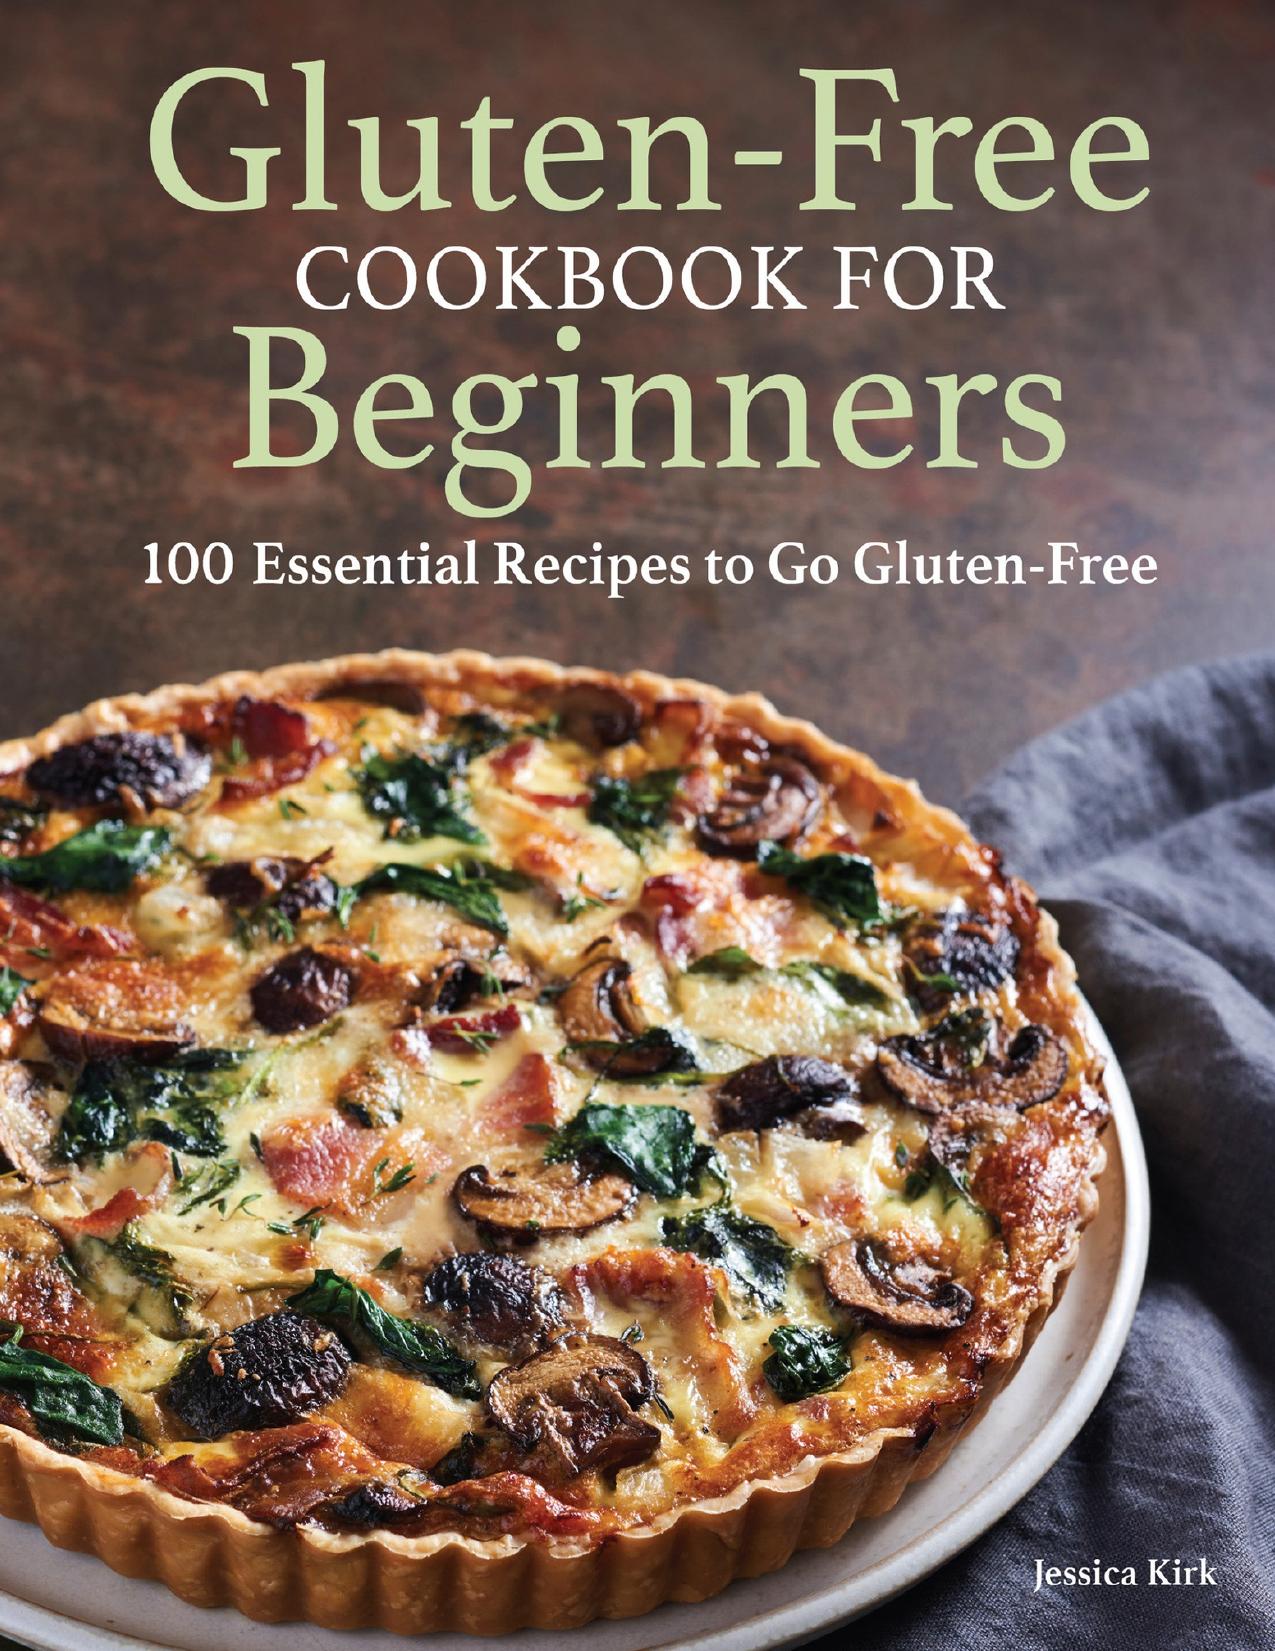 Gluten Free Cookbook for Beginners: Gluten-Free Cookbook for Beginners by Kirk Jessica